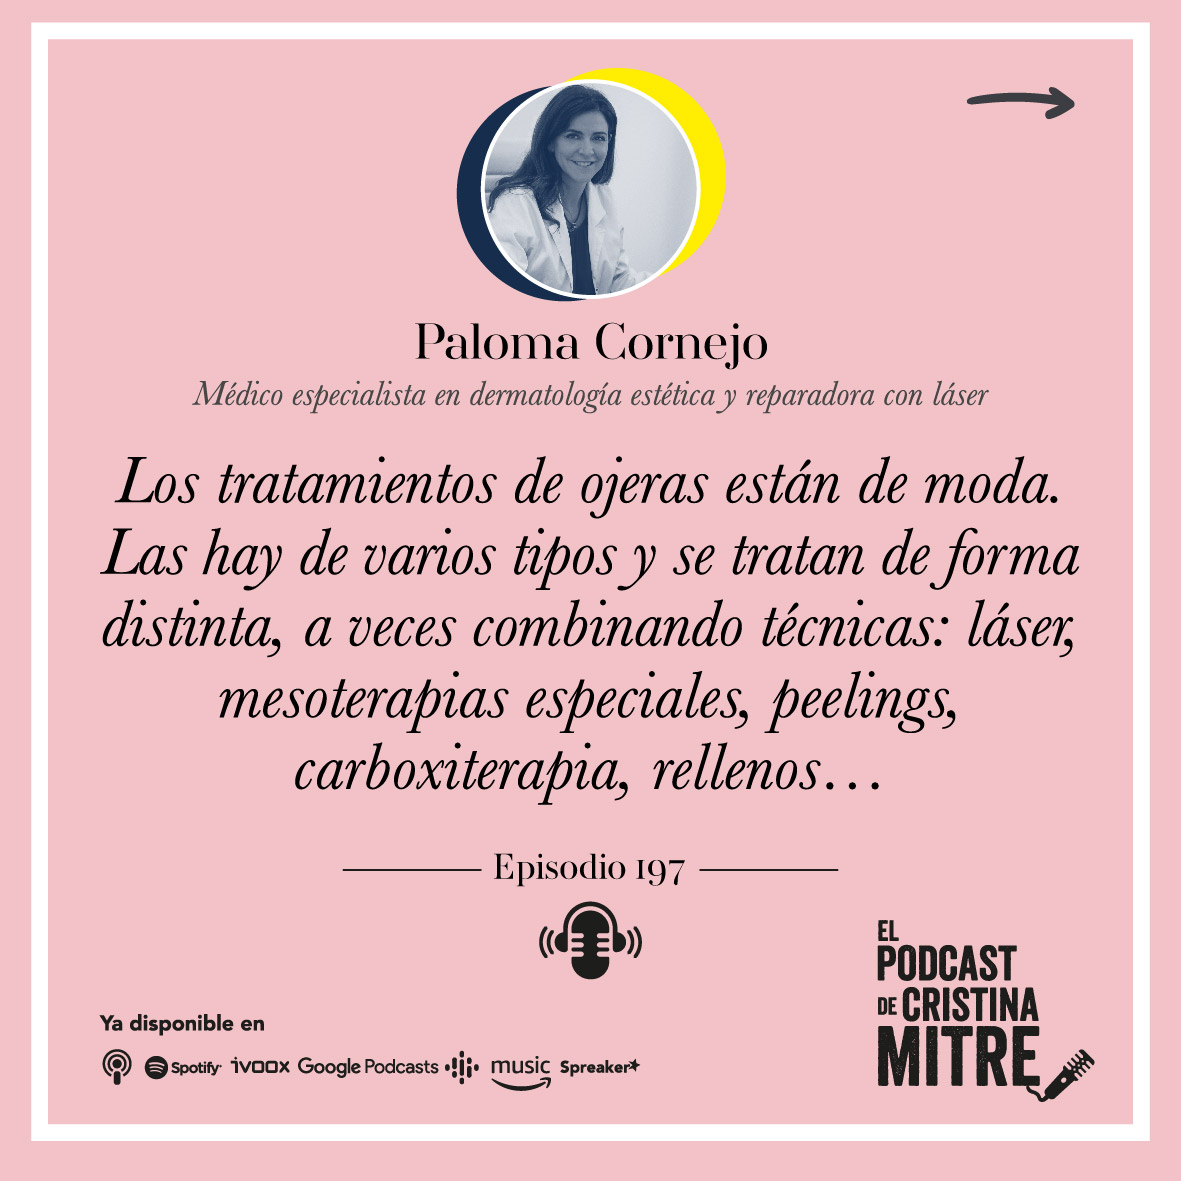 El Podcast de Cristina Mitre Paloma Cornejo tratamiento ojeras